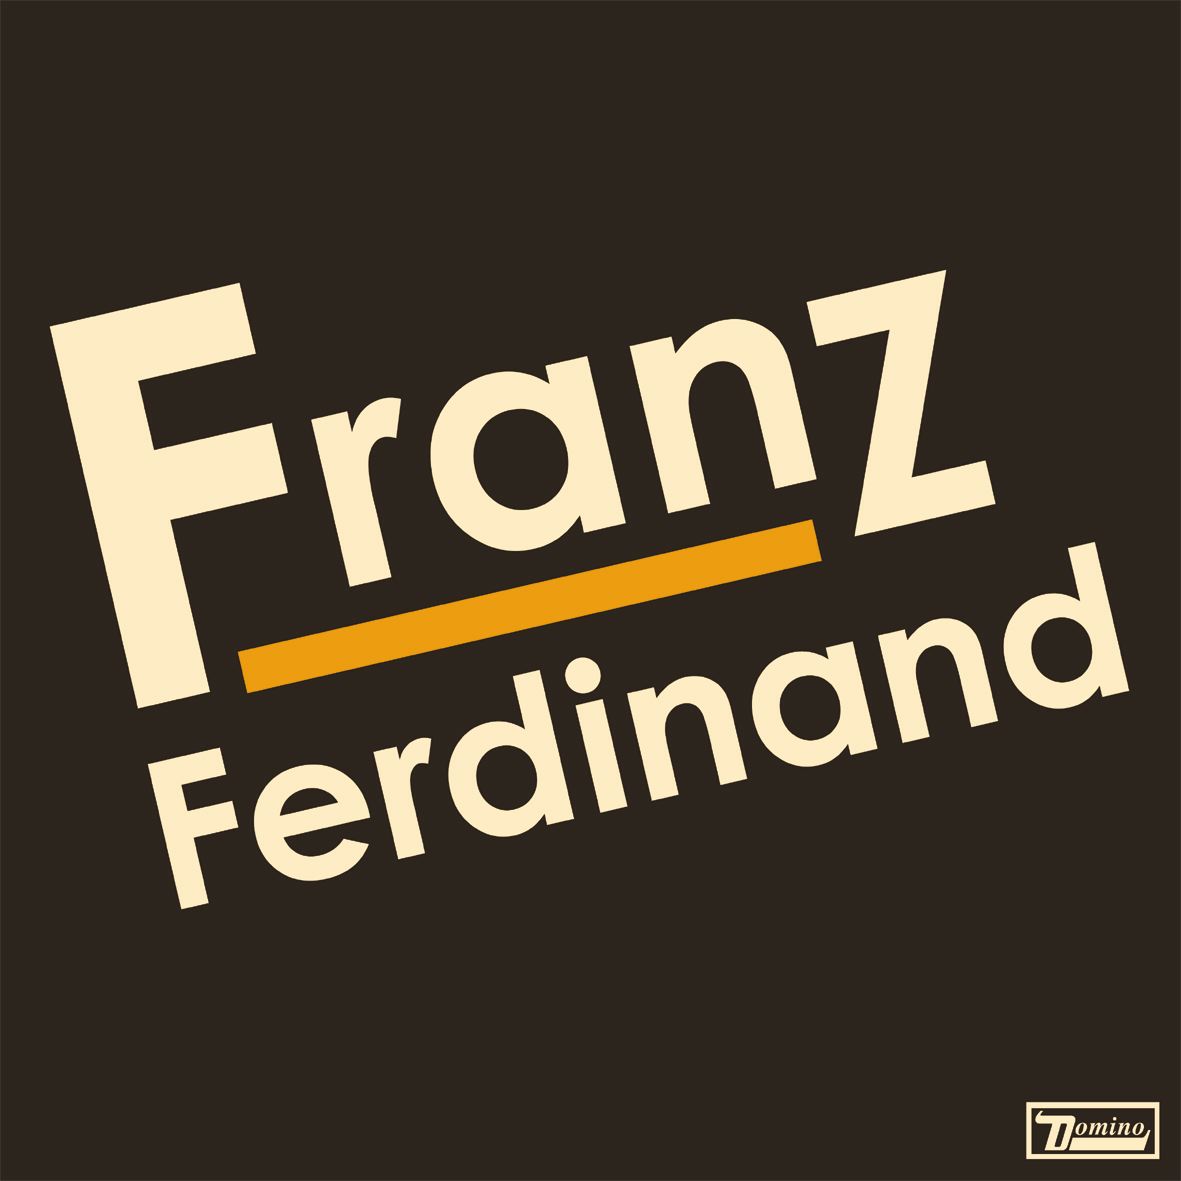 Franz Ferdinand - Franz Ferdinand - CD